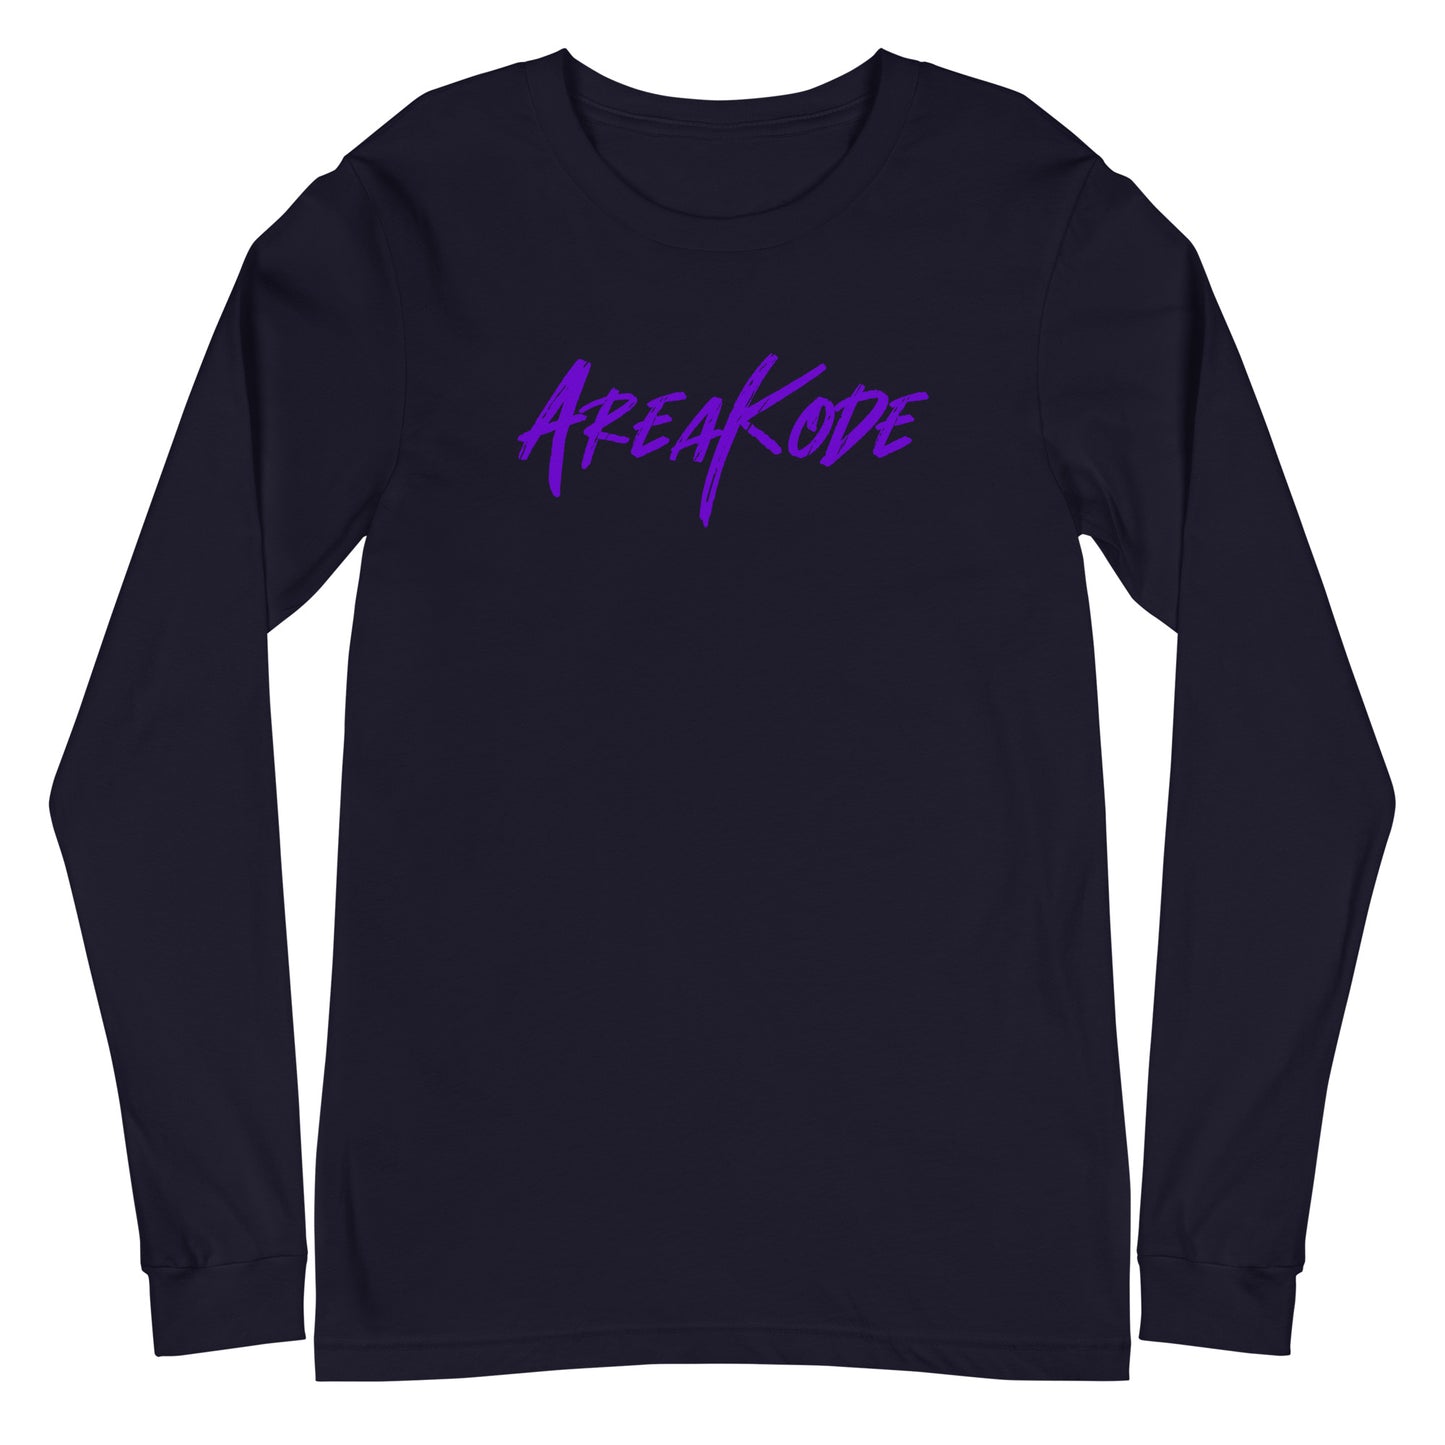 AreaKode - Unisex Long Sleeve (purple)